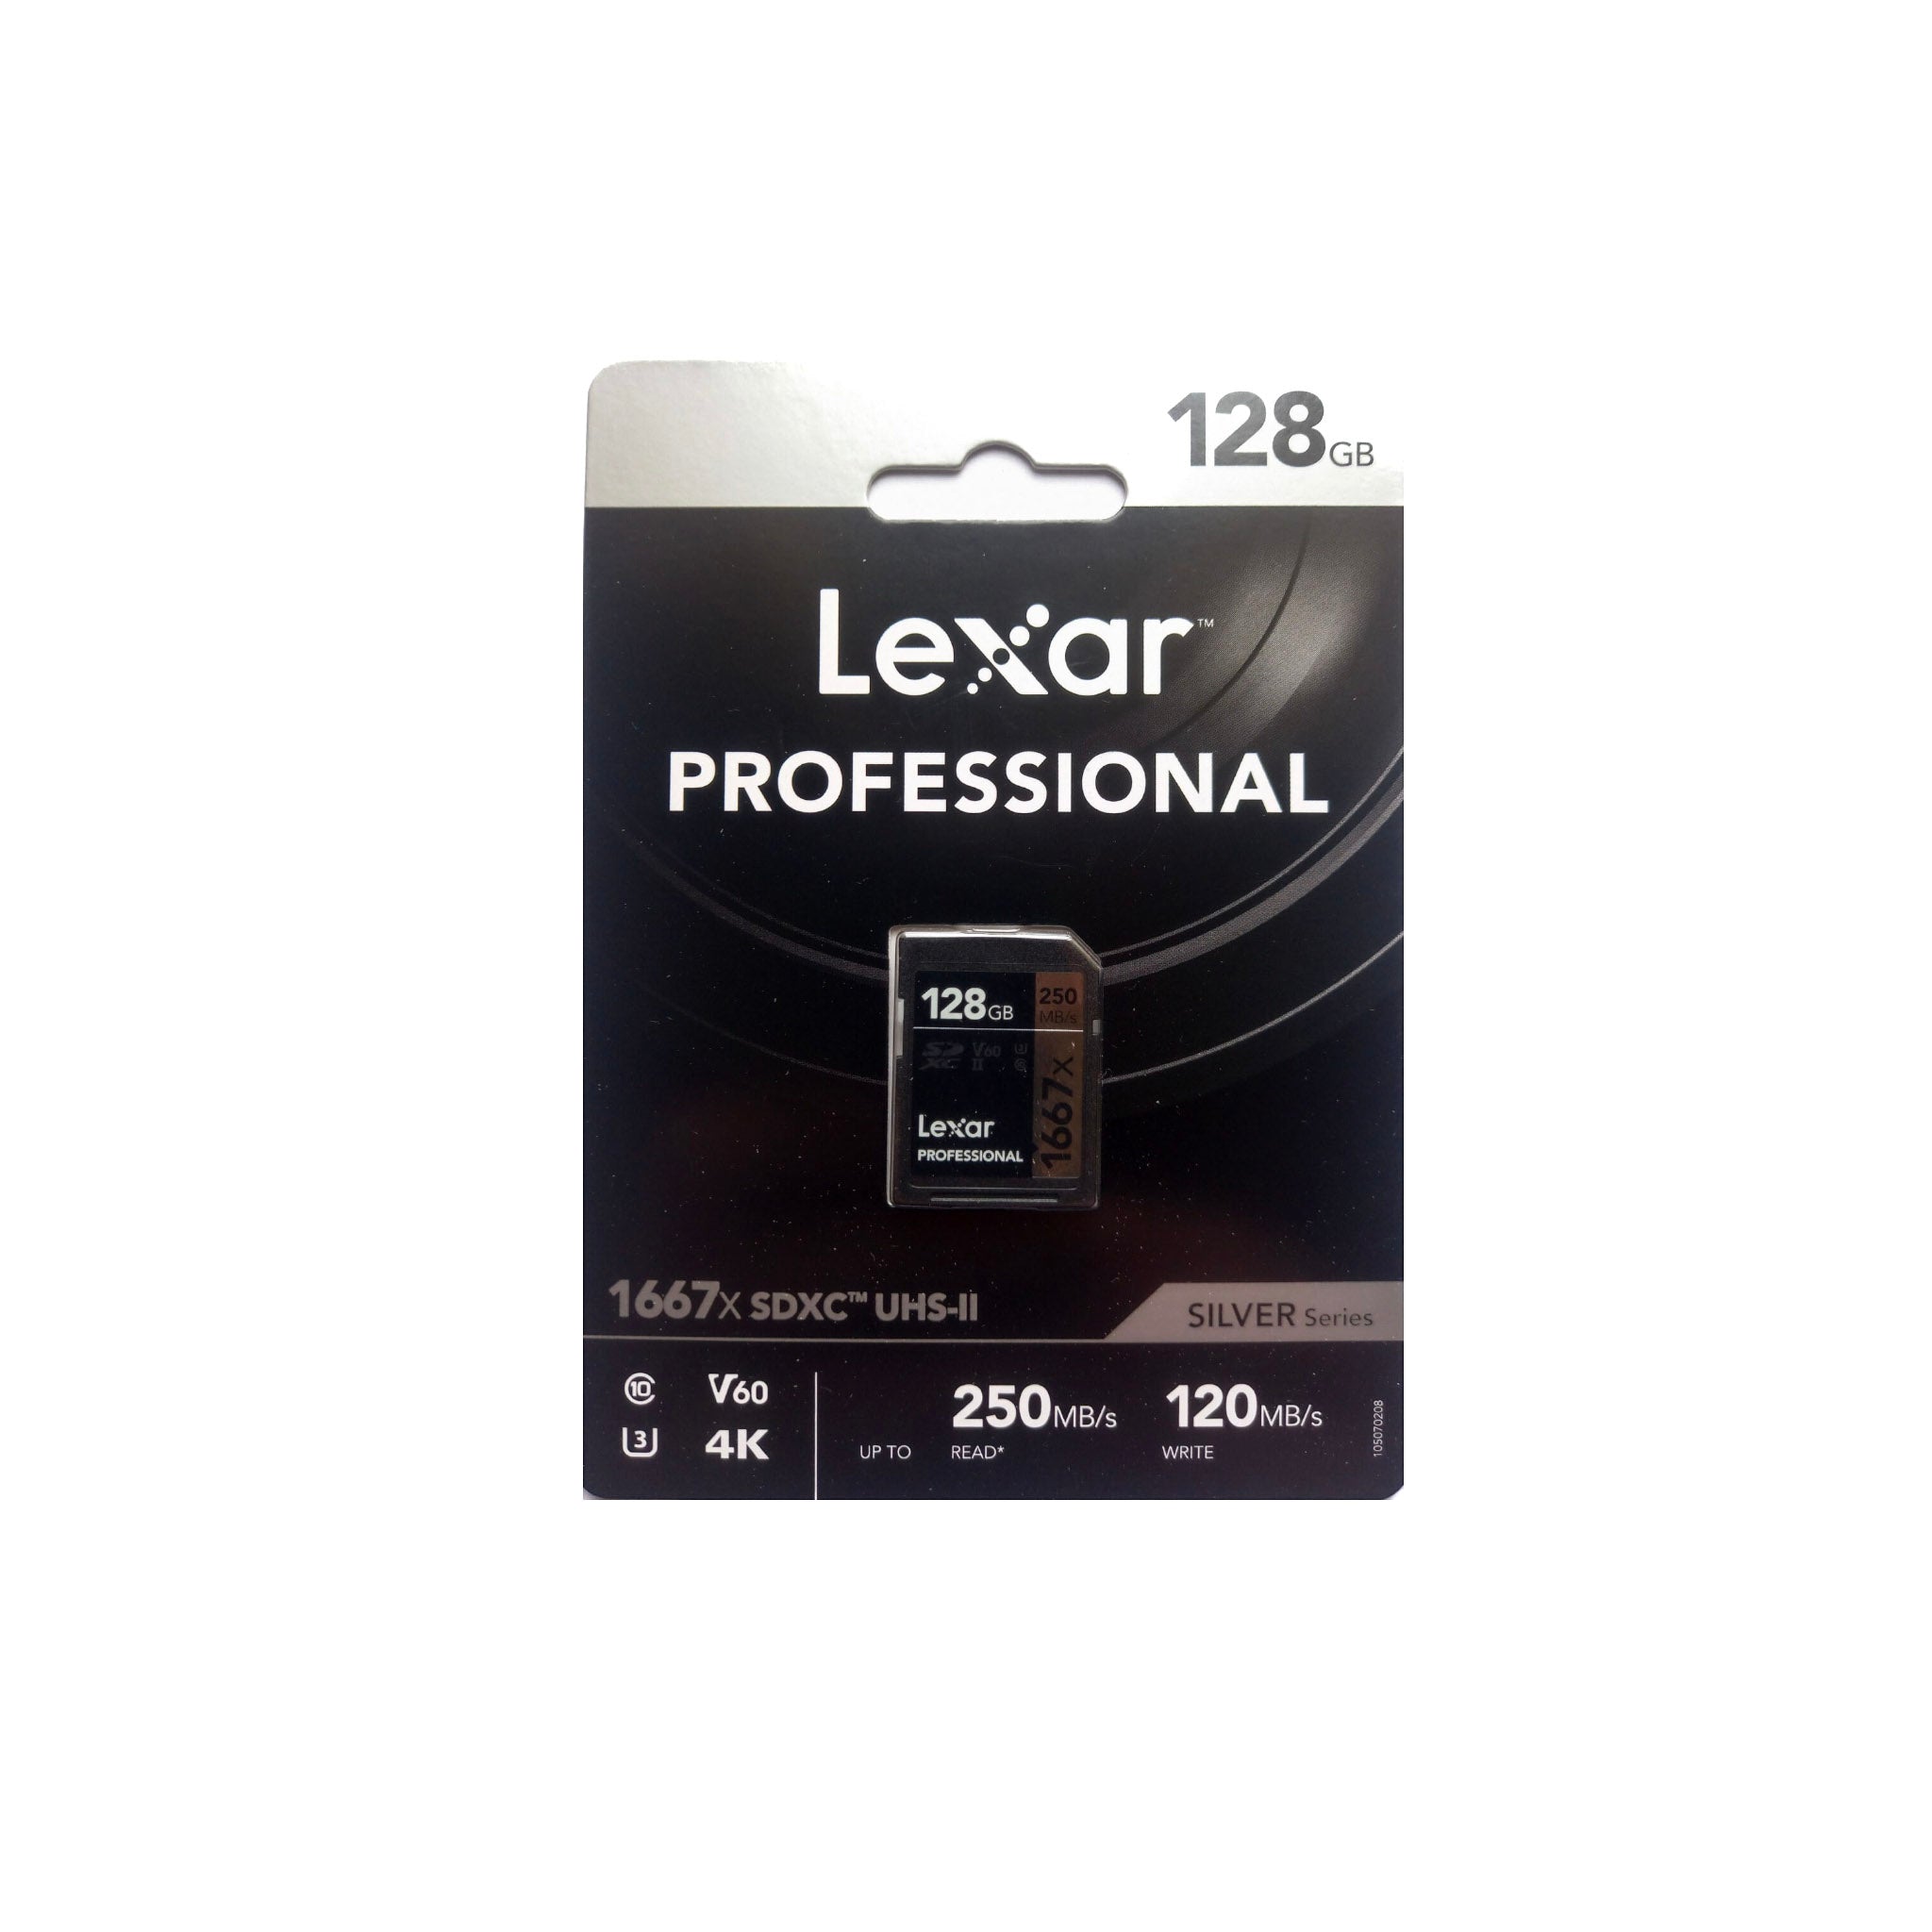 Lexar 128 GB SDXC Card Professional UHS-II (Silver Series)